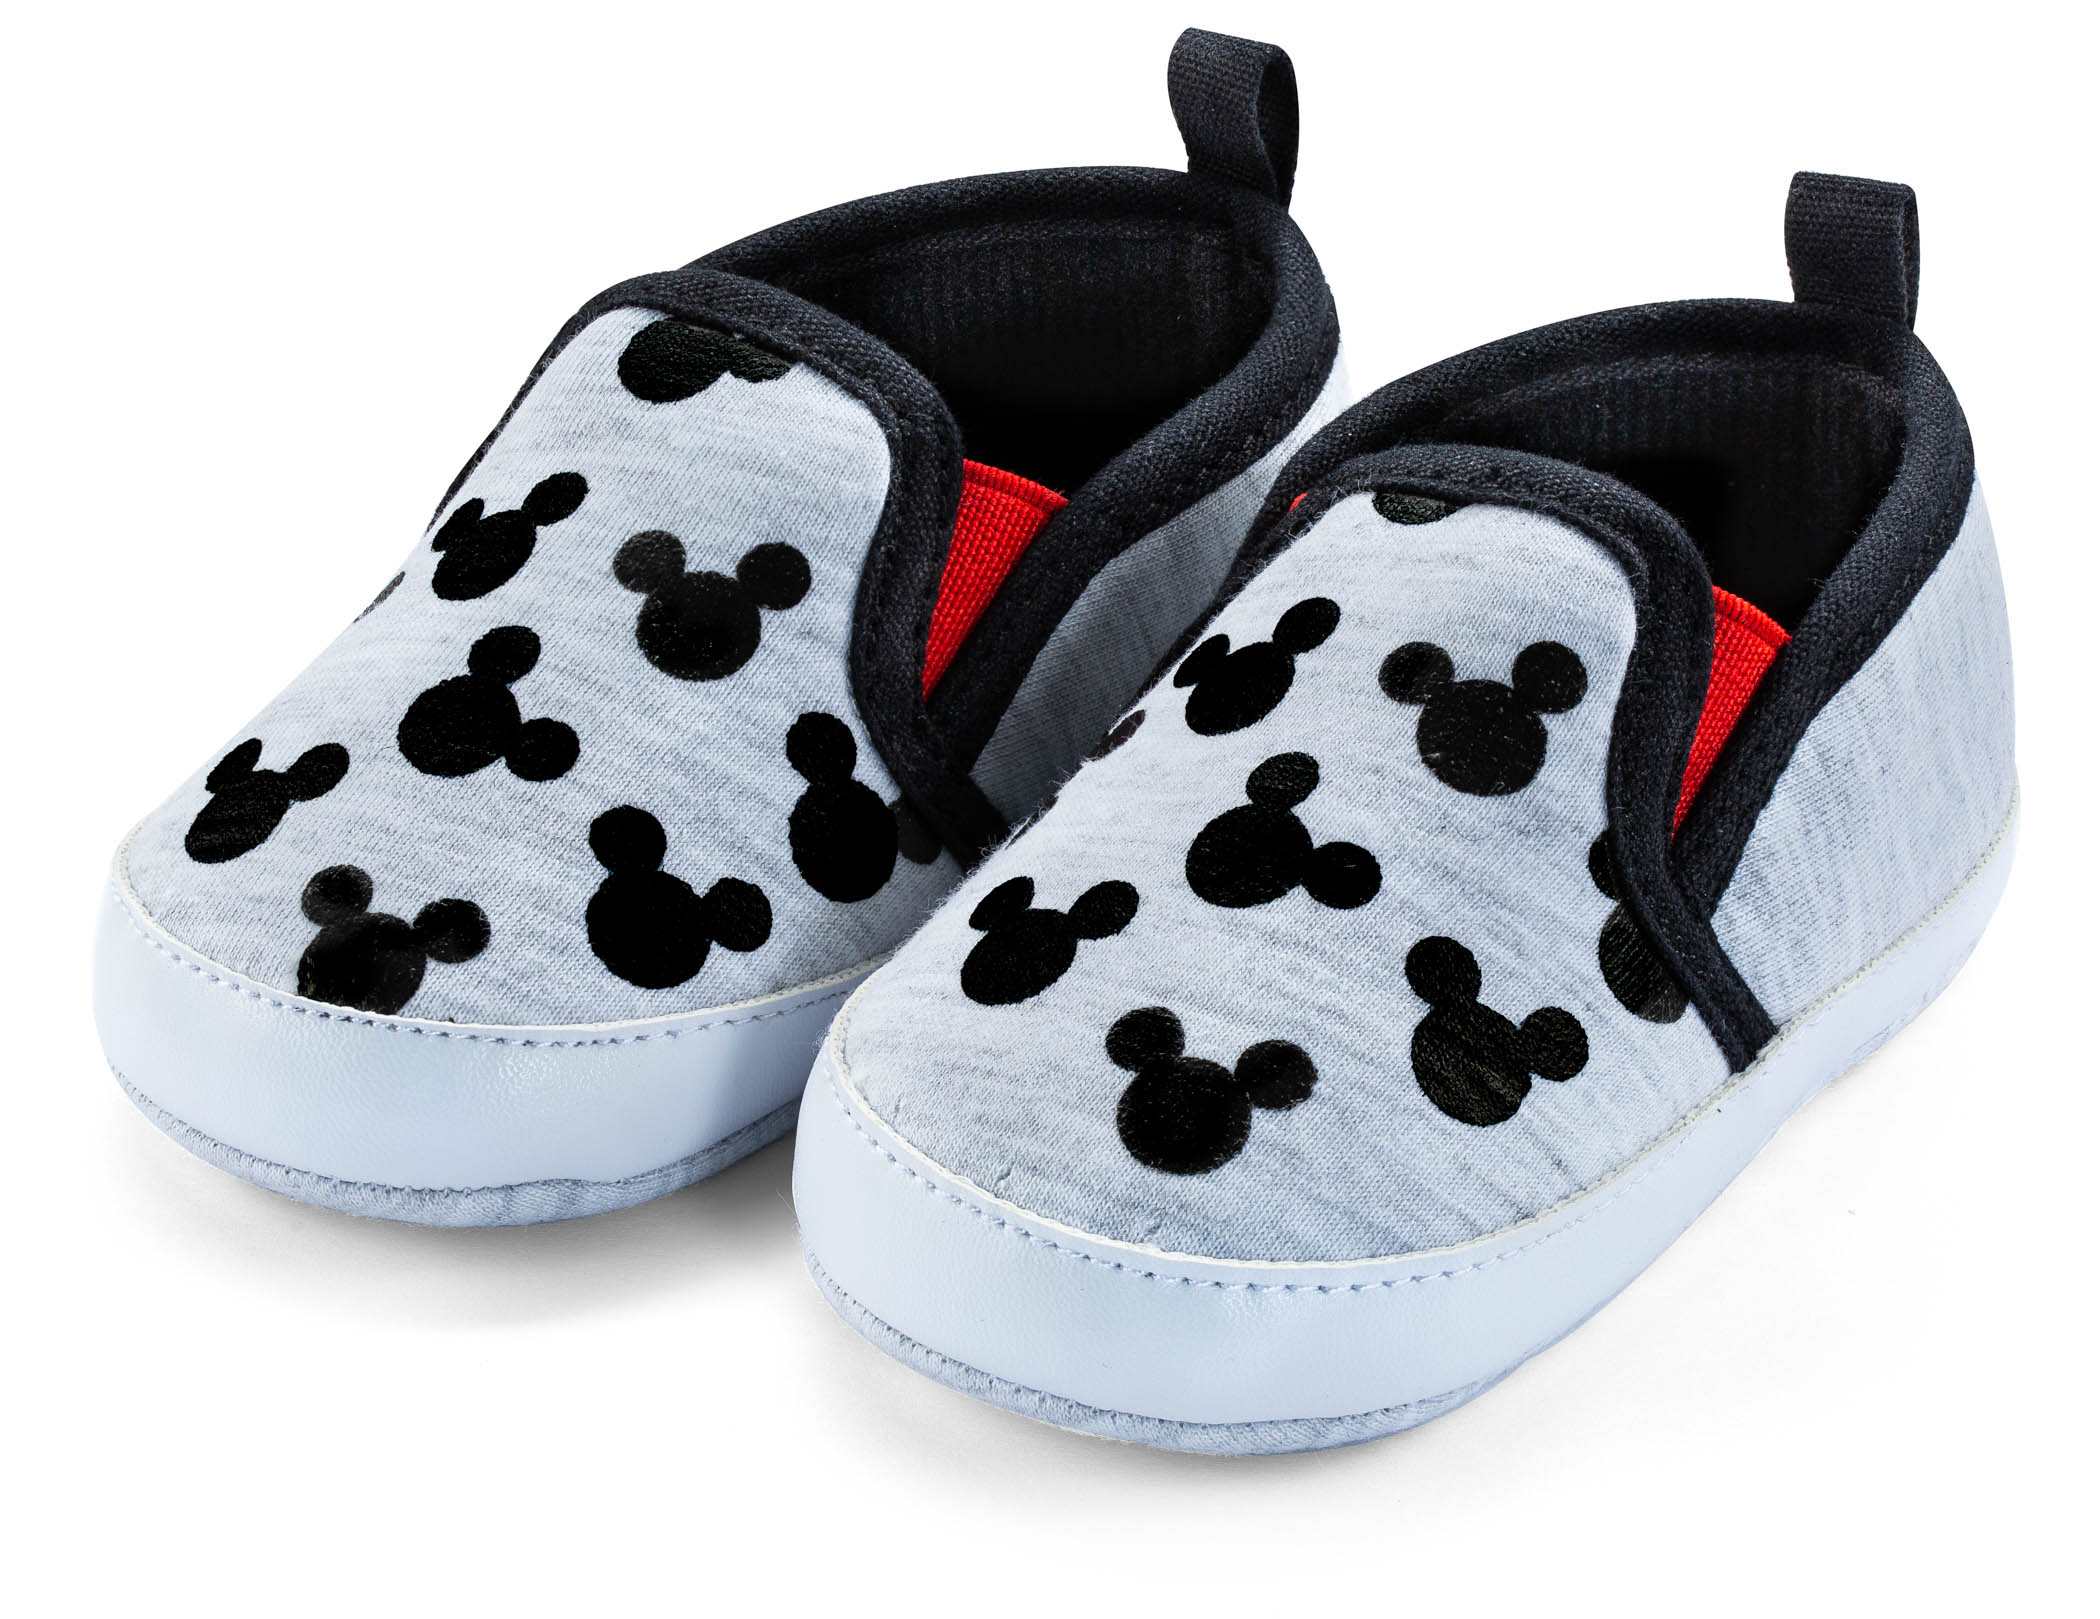 Disney Mickey Mouse Black Infant Prewalker Soft Sole Slip-on Shoes - Size 6-9 Months - image 1 of 6